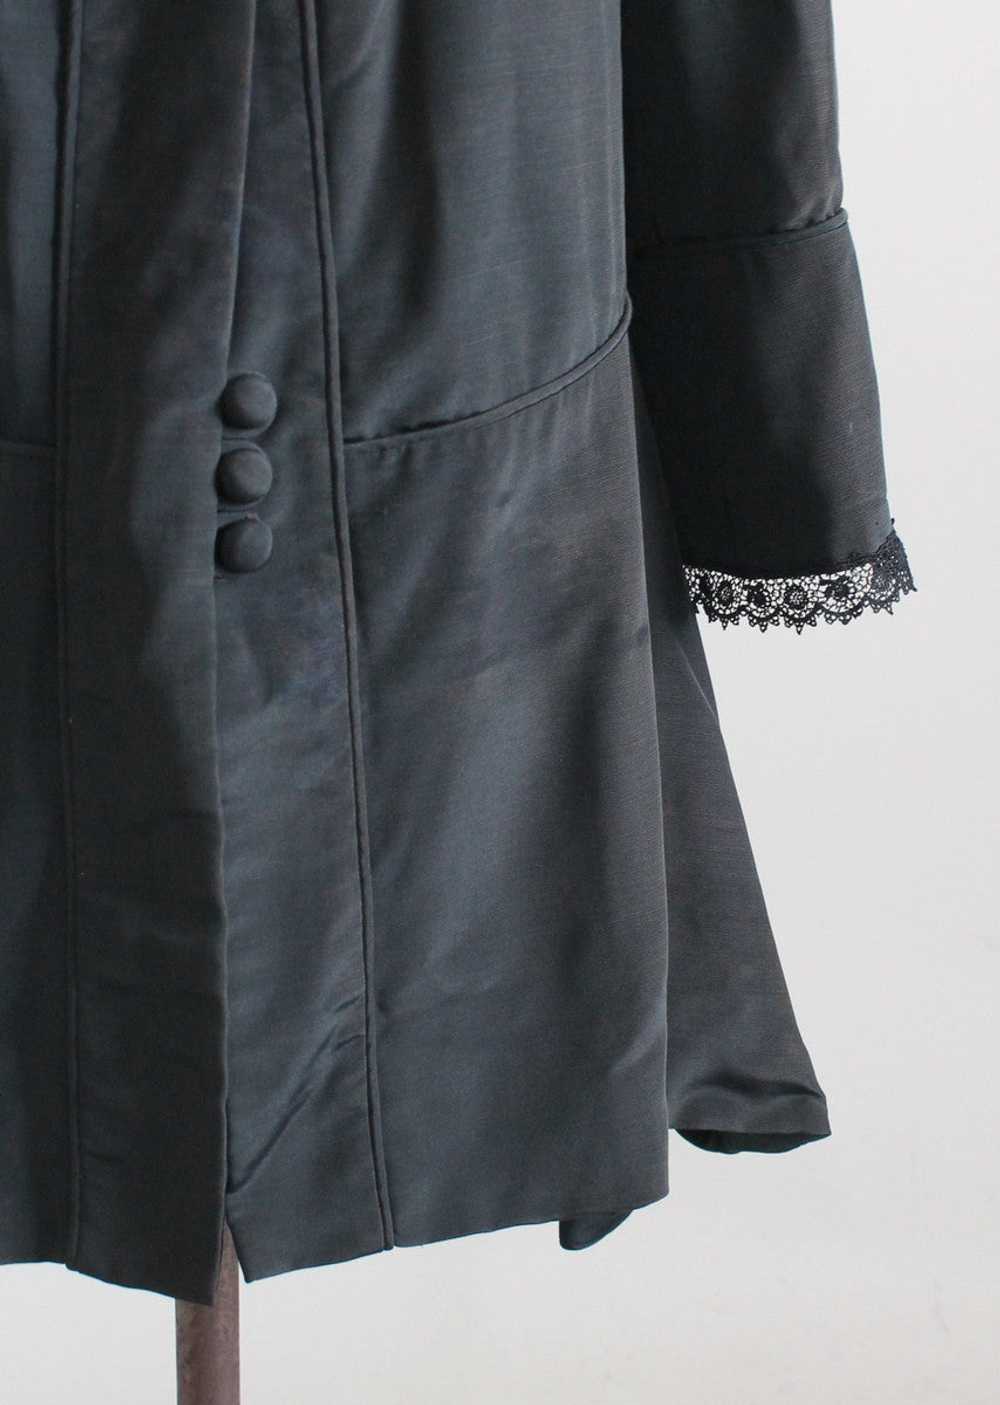 Antique Edwardian Black Silk Coat with Stand Up C… - image 4